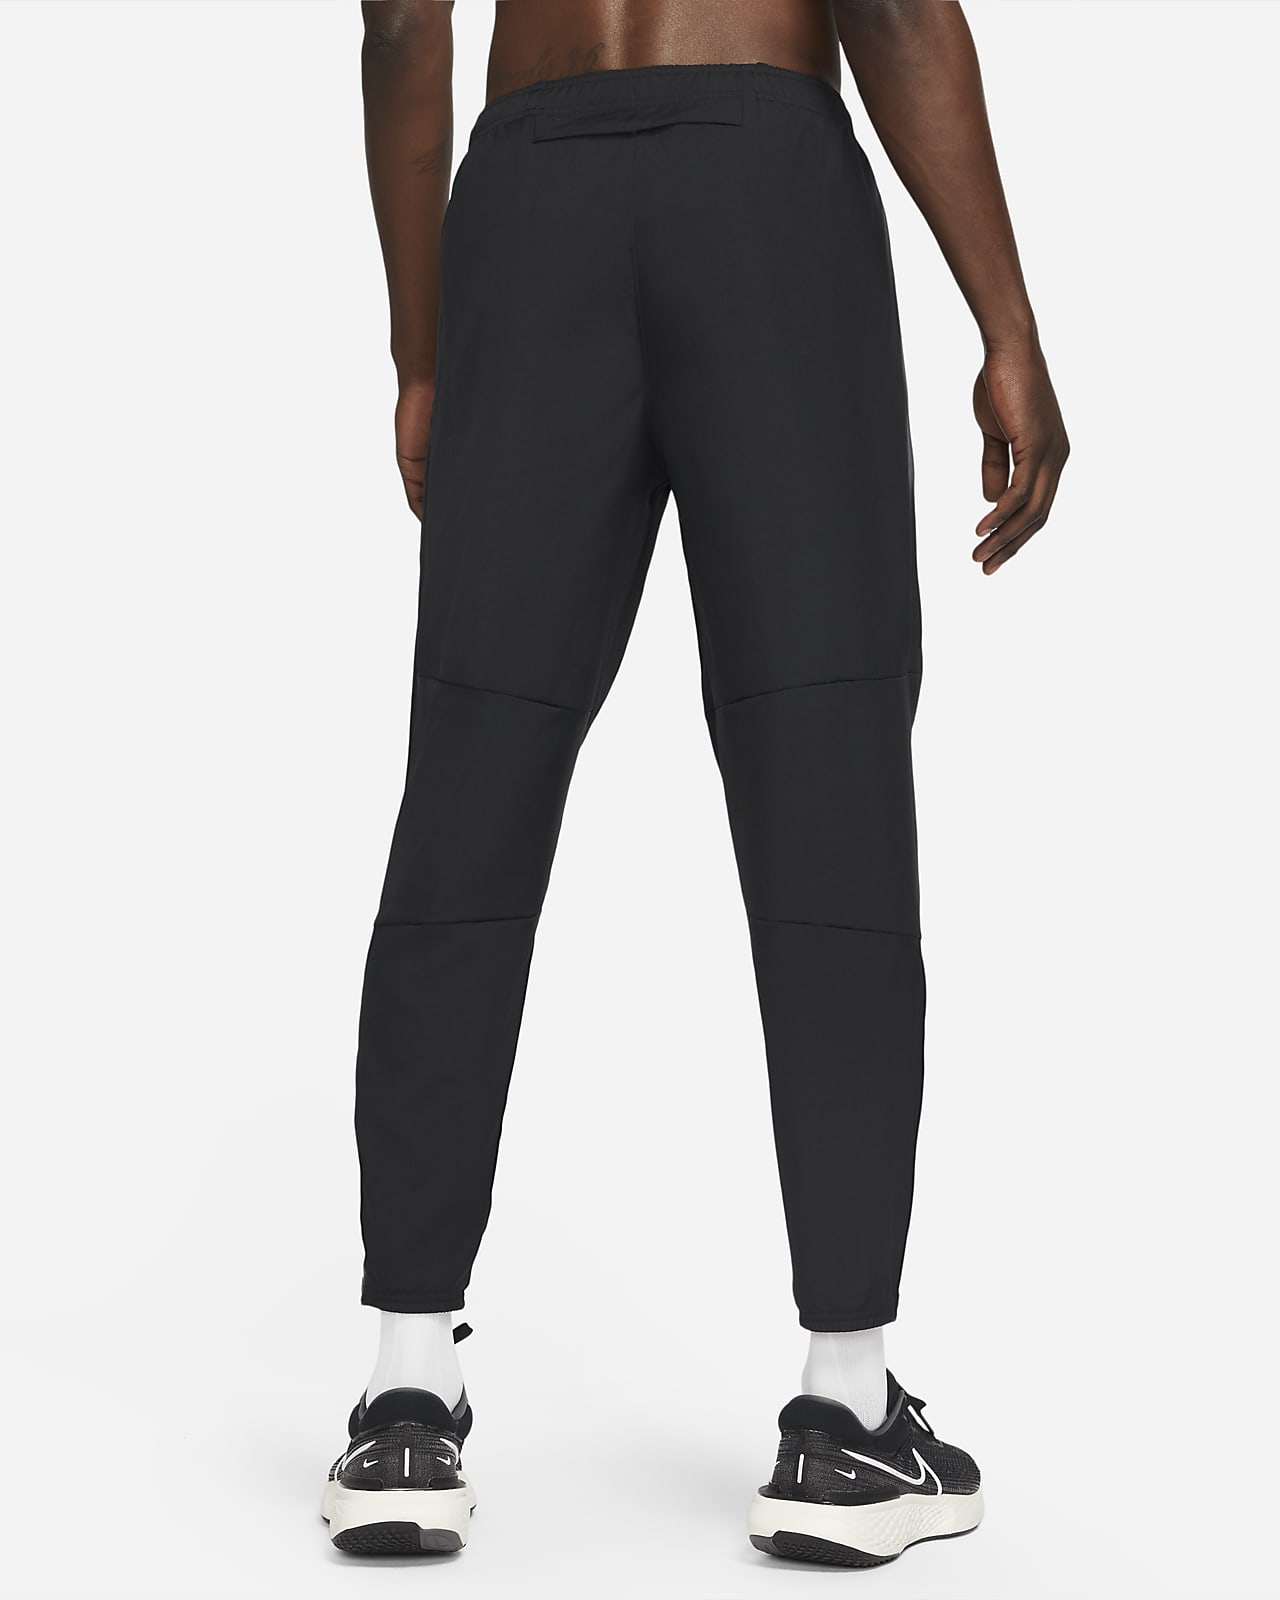 Nike Dri-FIT Challenger Woven Running Pants Men - black FQ4780-010